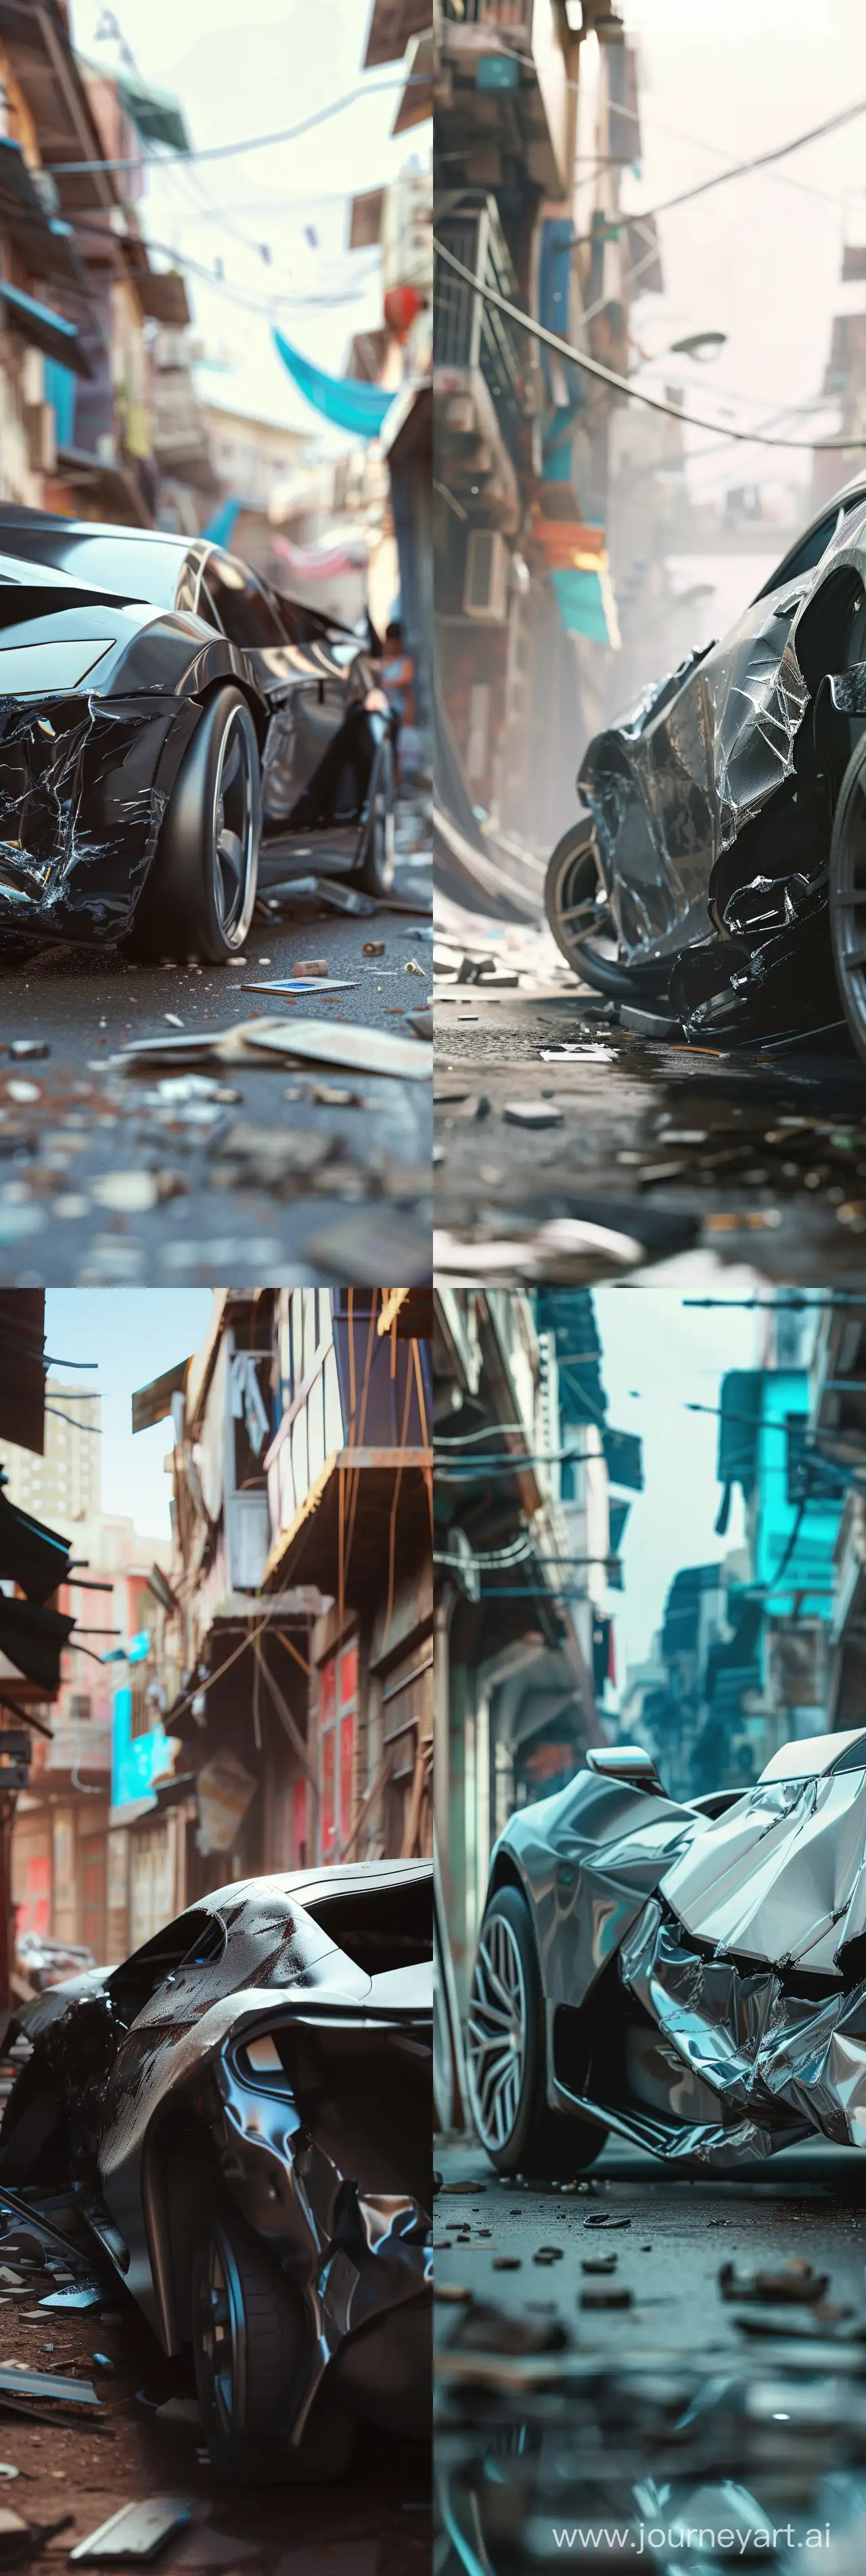 Wrecked-Futuristic-Car-in-Urban-Slums-Street-Scene-CloseUp